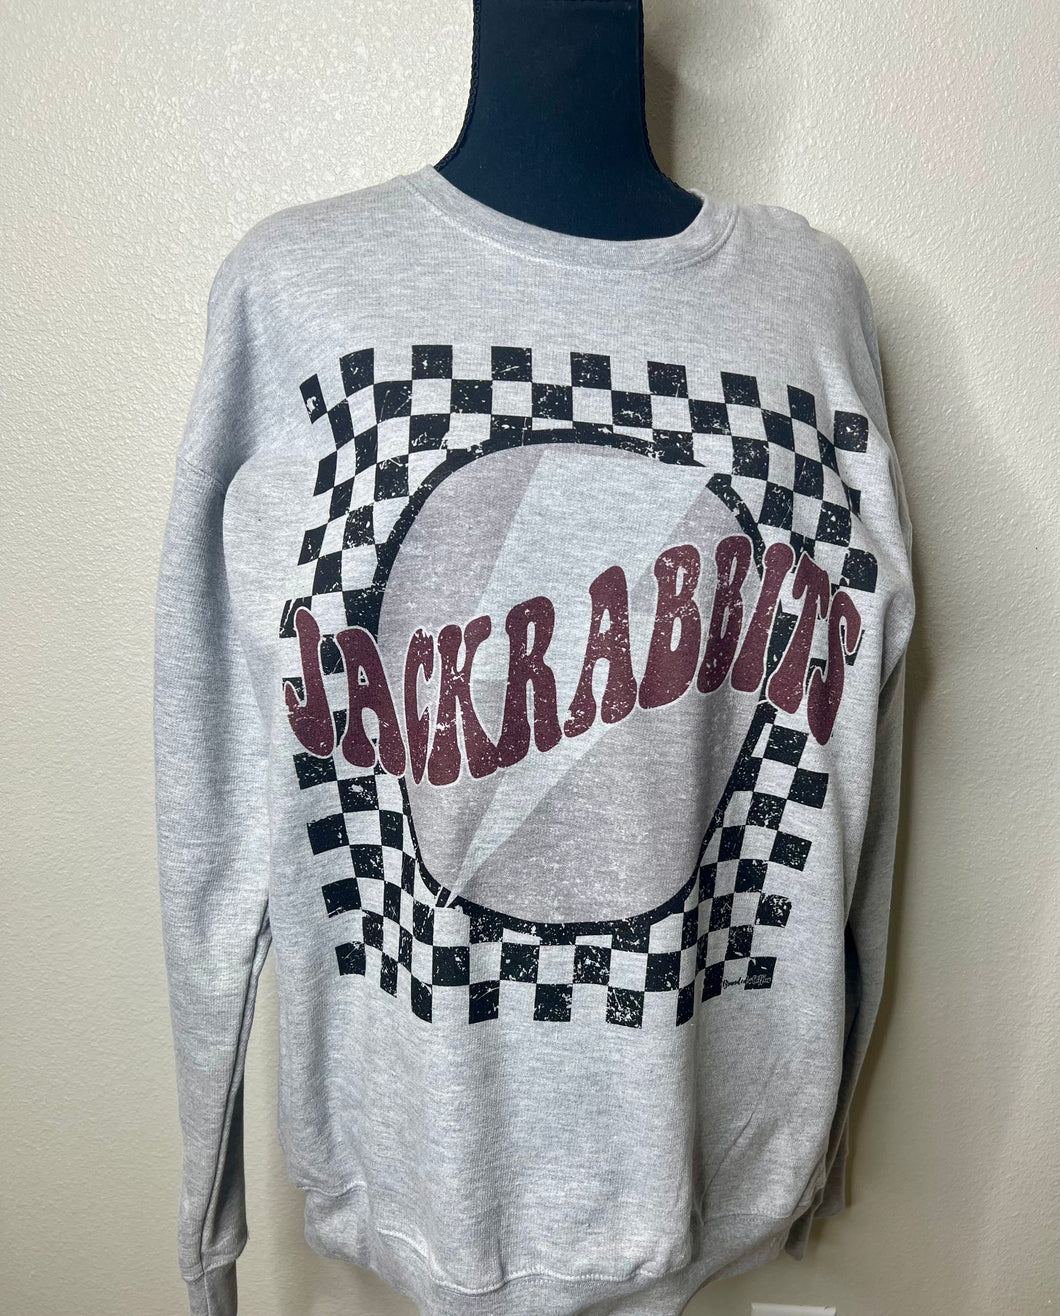 Checkered Ralls Jackrabbits Sweatshirt